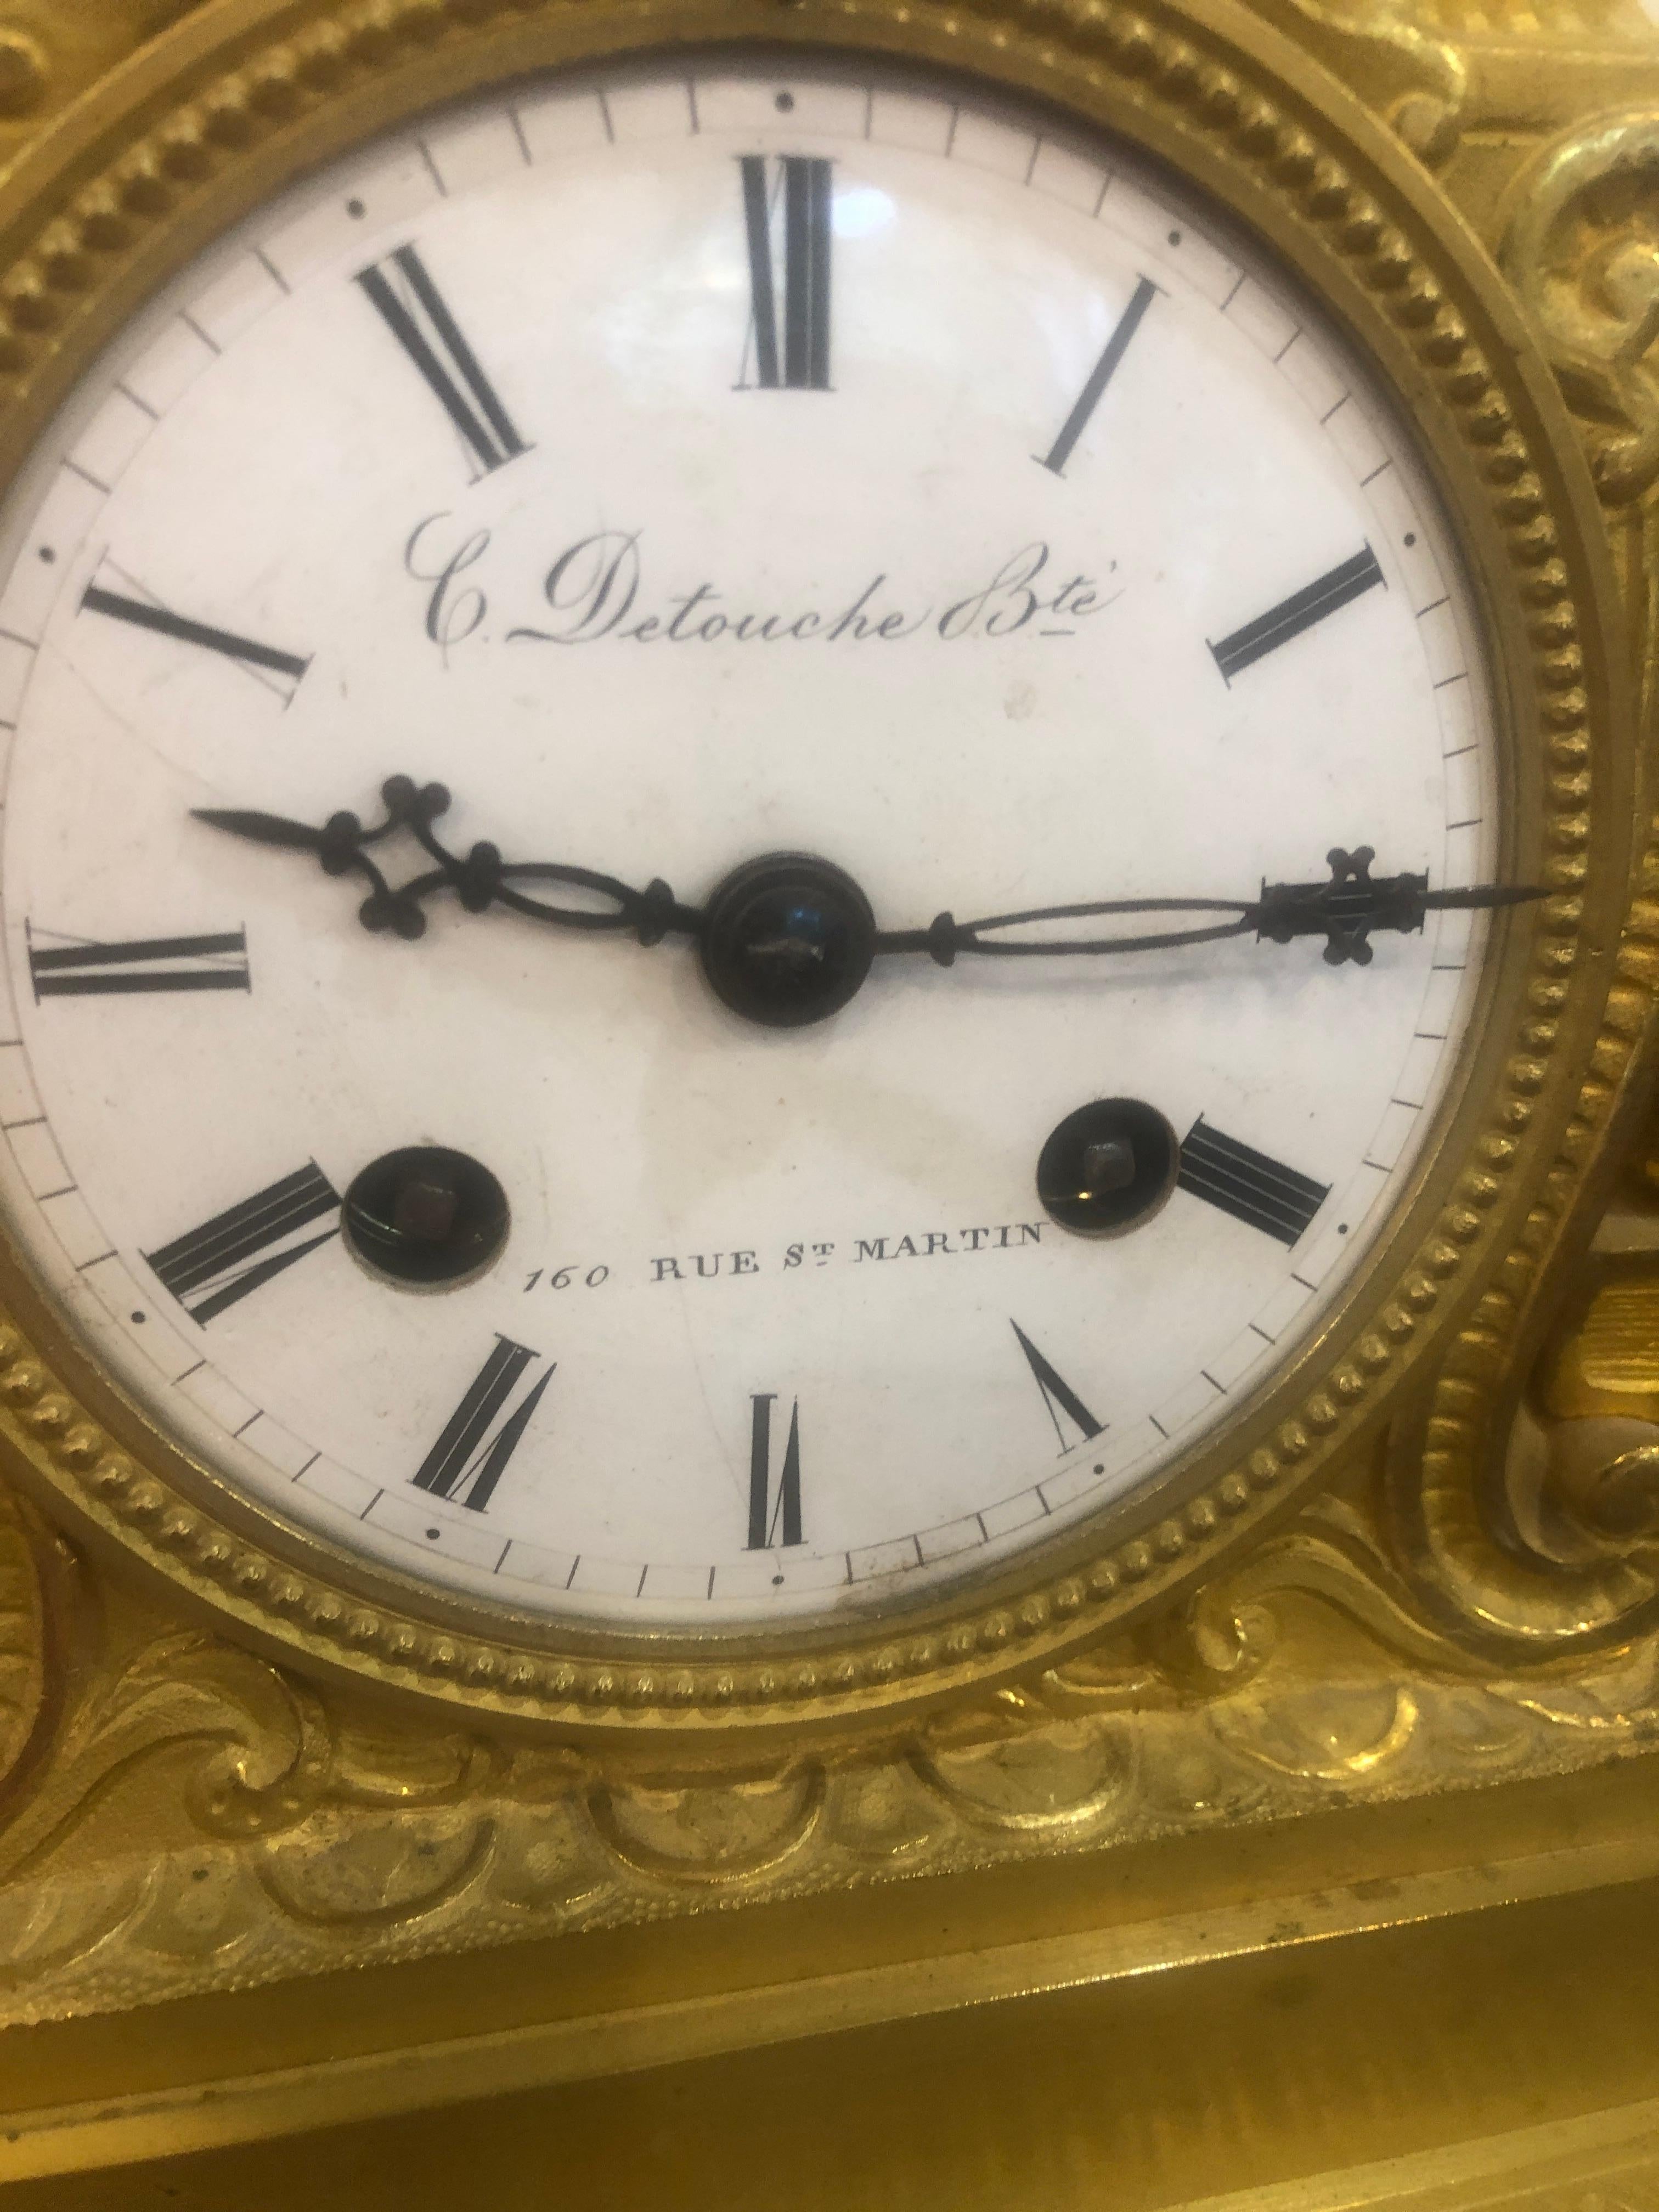 Fantastic and important mantel clock, signed C. Detouche Bte, 160 Rue. St Martin. Paris, France, circa 1830-1835.

Constantin-Louis Detouche (1810-1889) born in Paris on 10th October 1810, he was the son of clockmaker Georges Detouche. He ran his